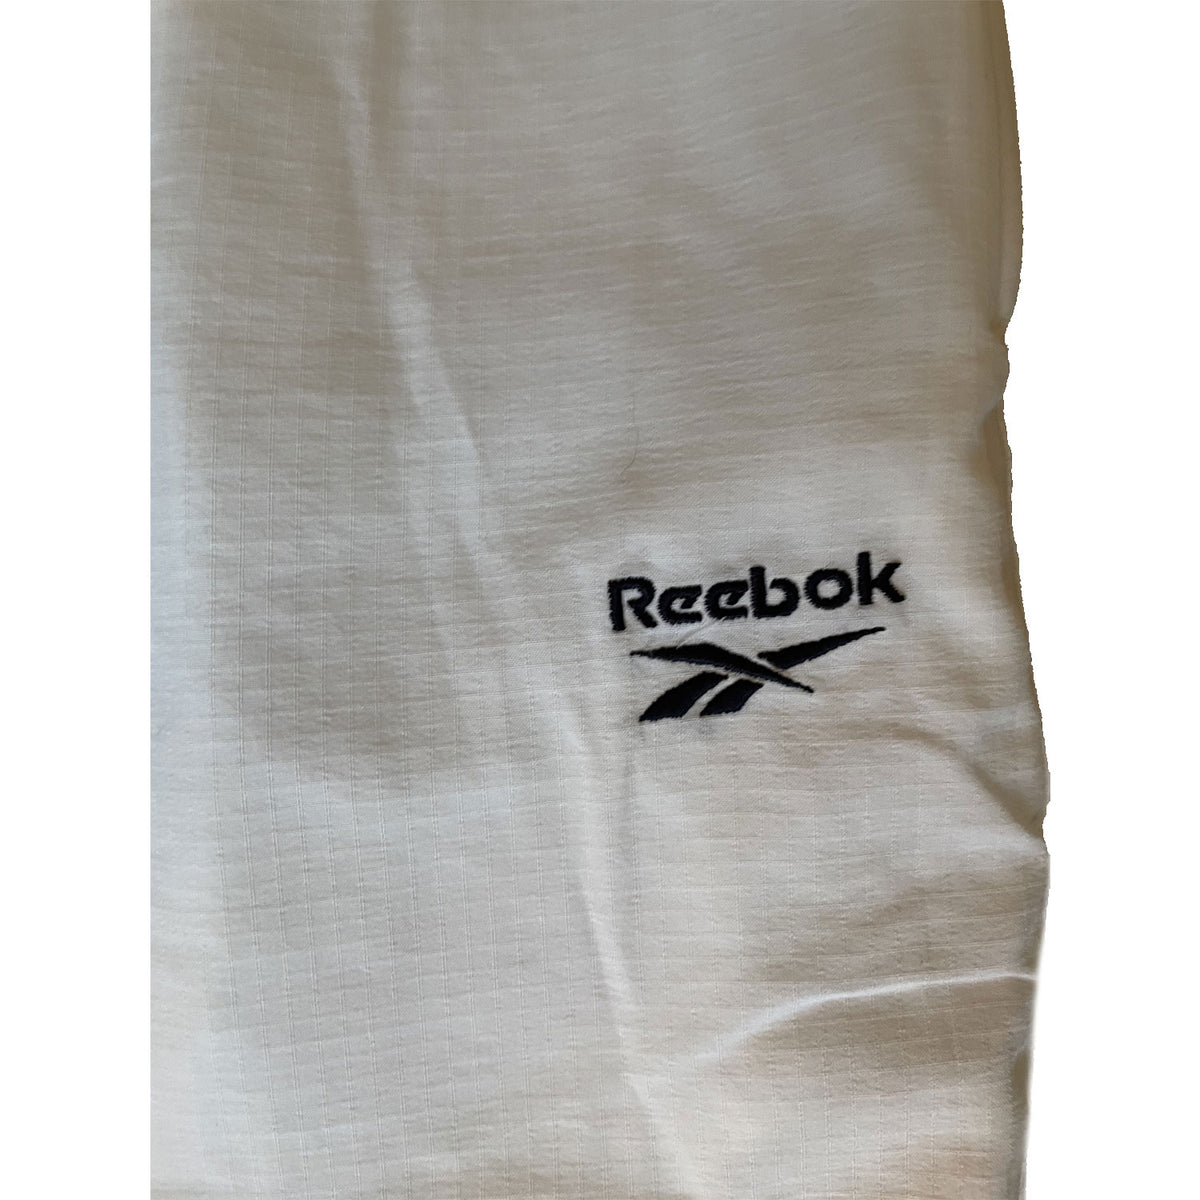 Reebok Original Mens Clearance Sport Track Pants